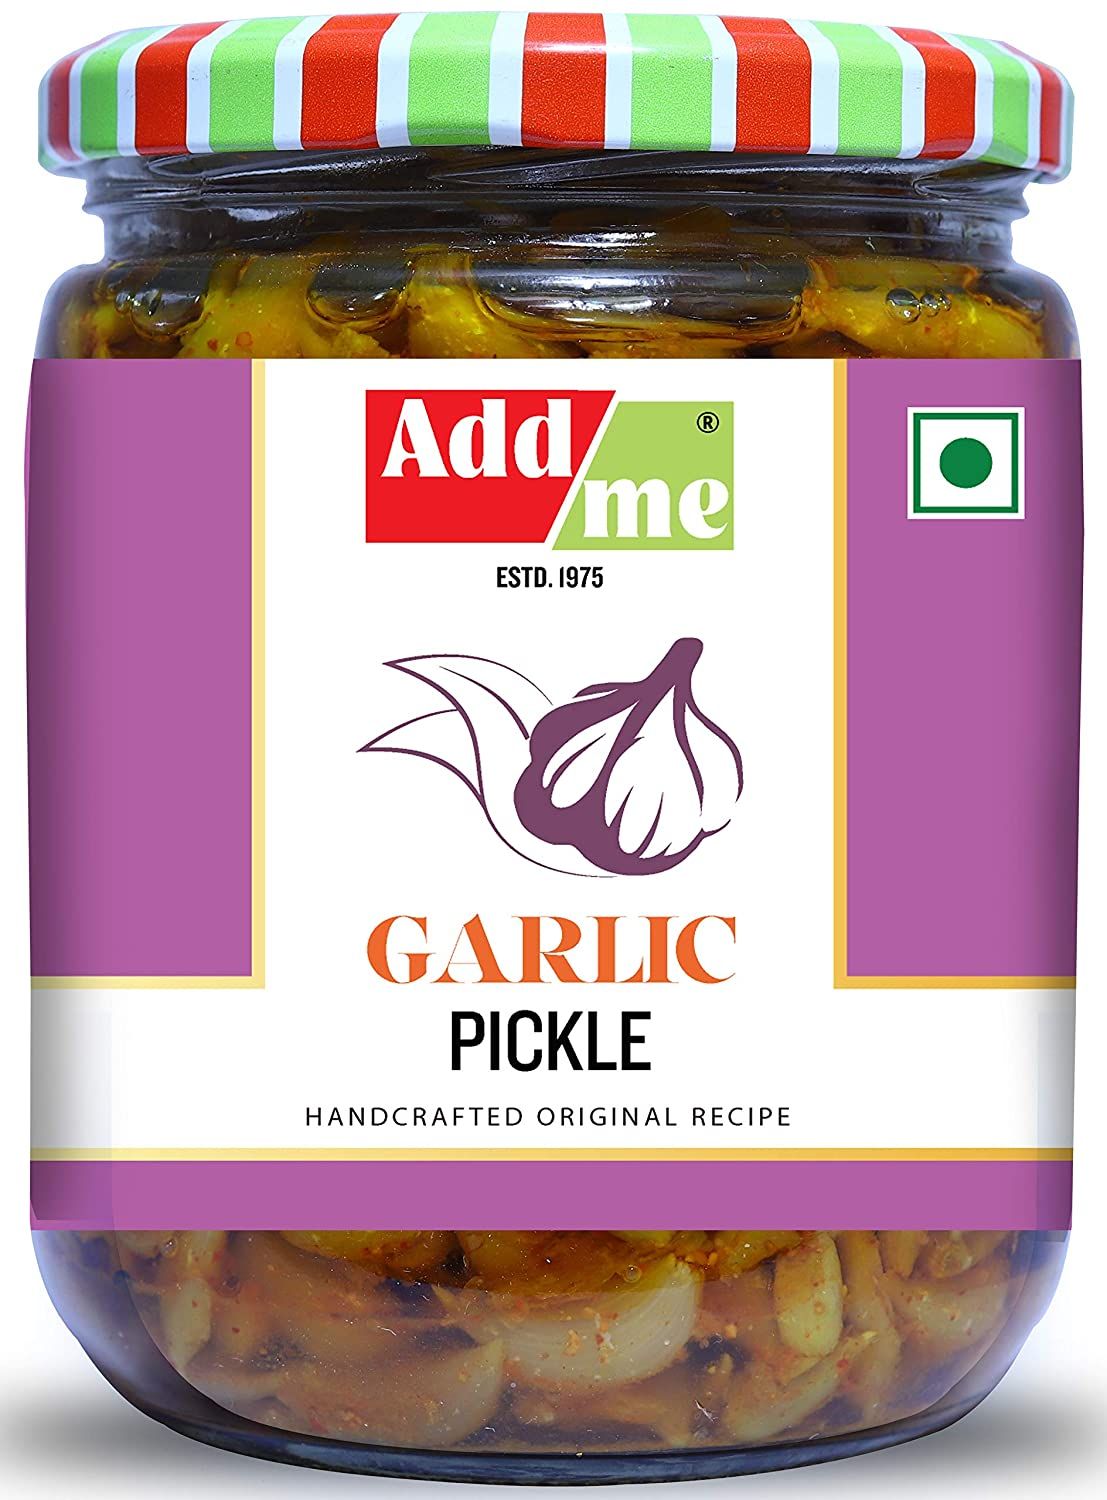 Add me Hot Garlic Pickle Image